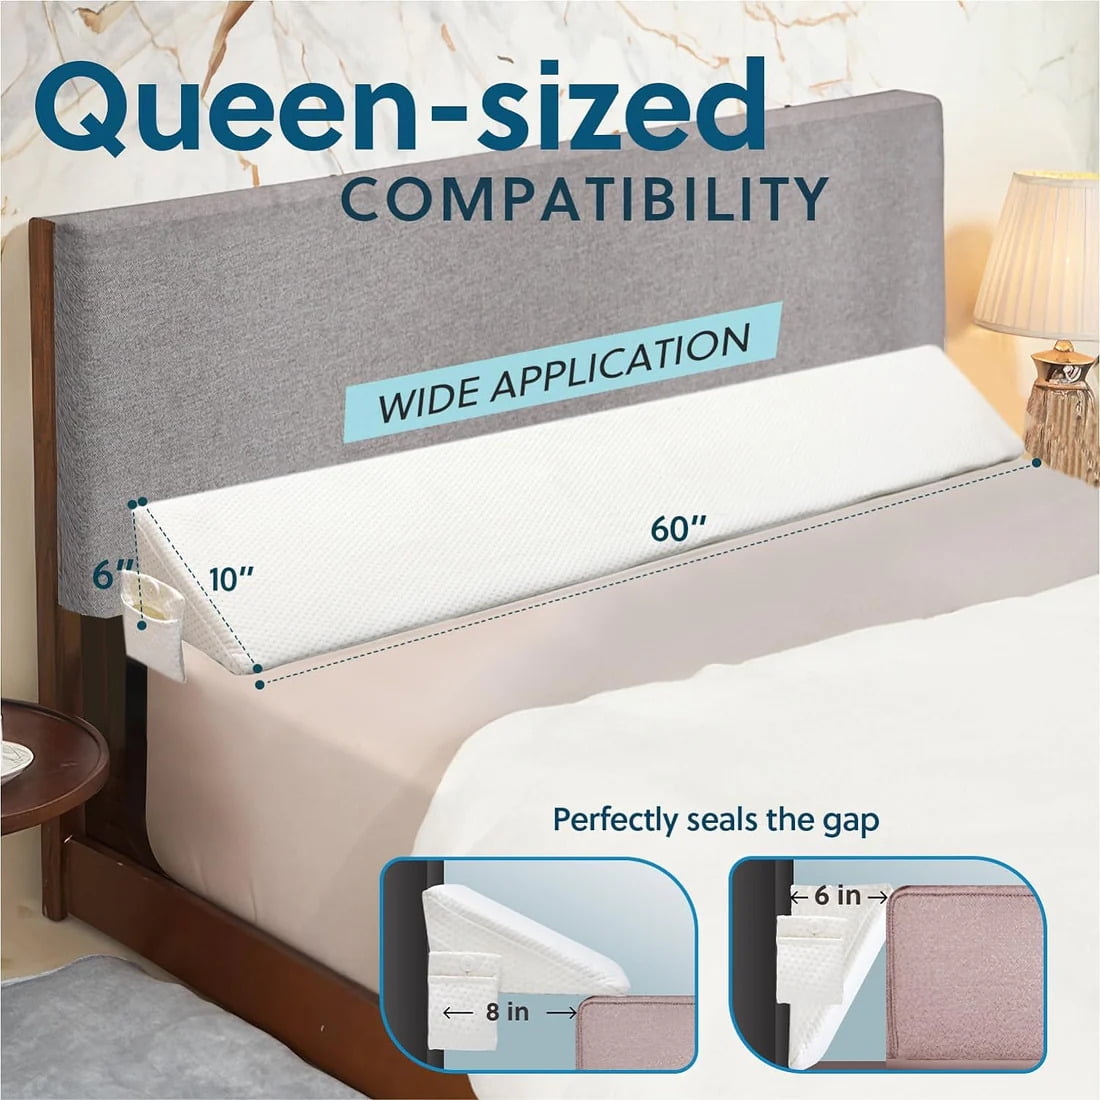 Full Mattress Wedge Snug Stop Pillow Bed Wedge headboard Gap filler with  case